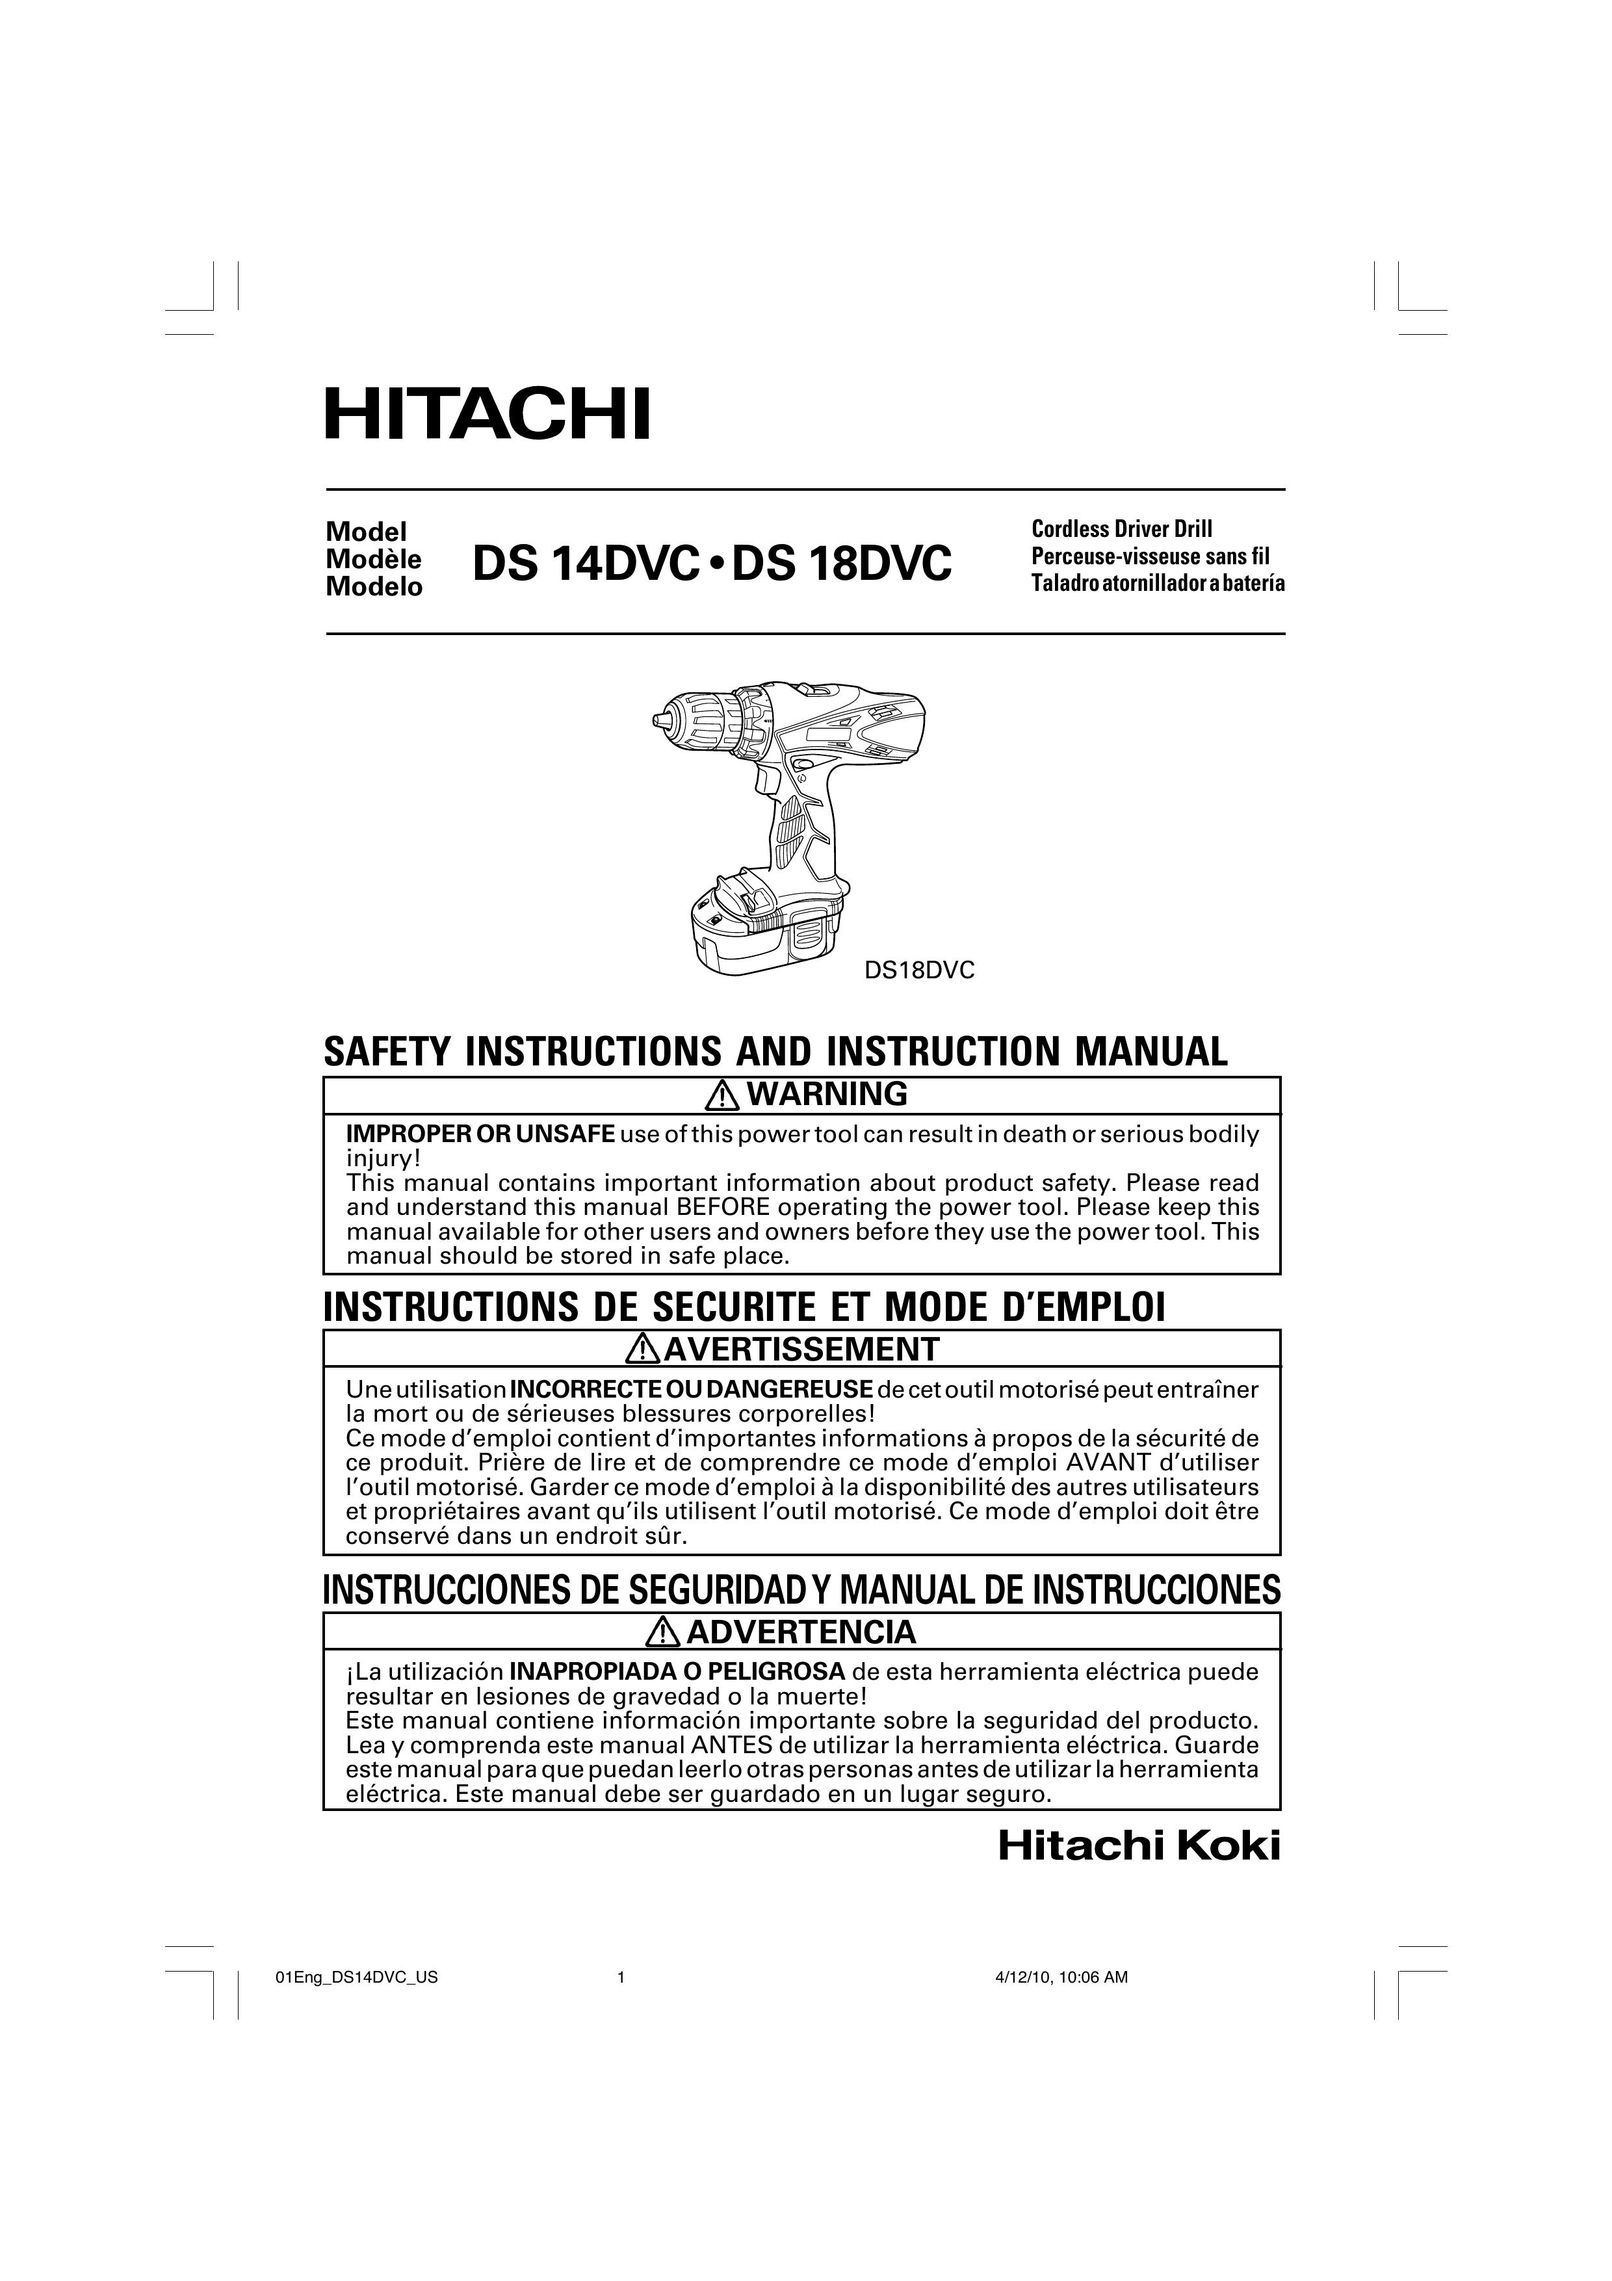 Hitachi DS 18DVC Cordless Drill User Manual